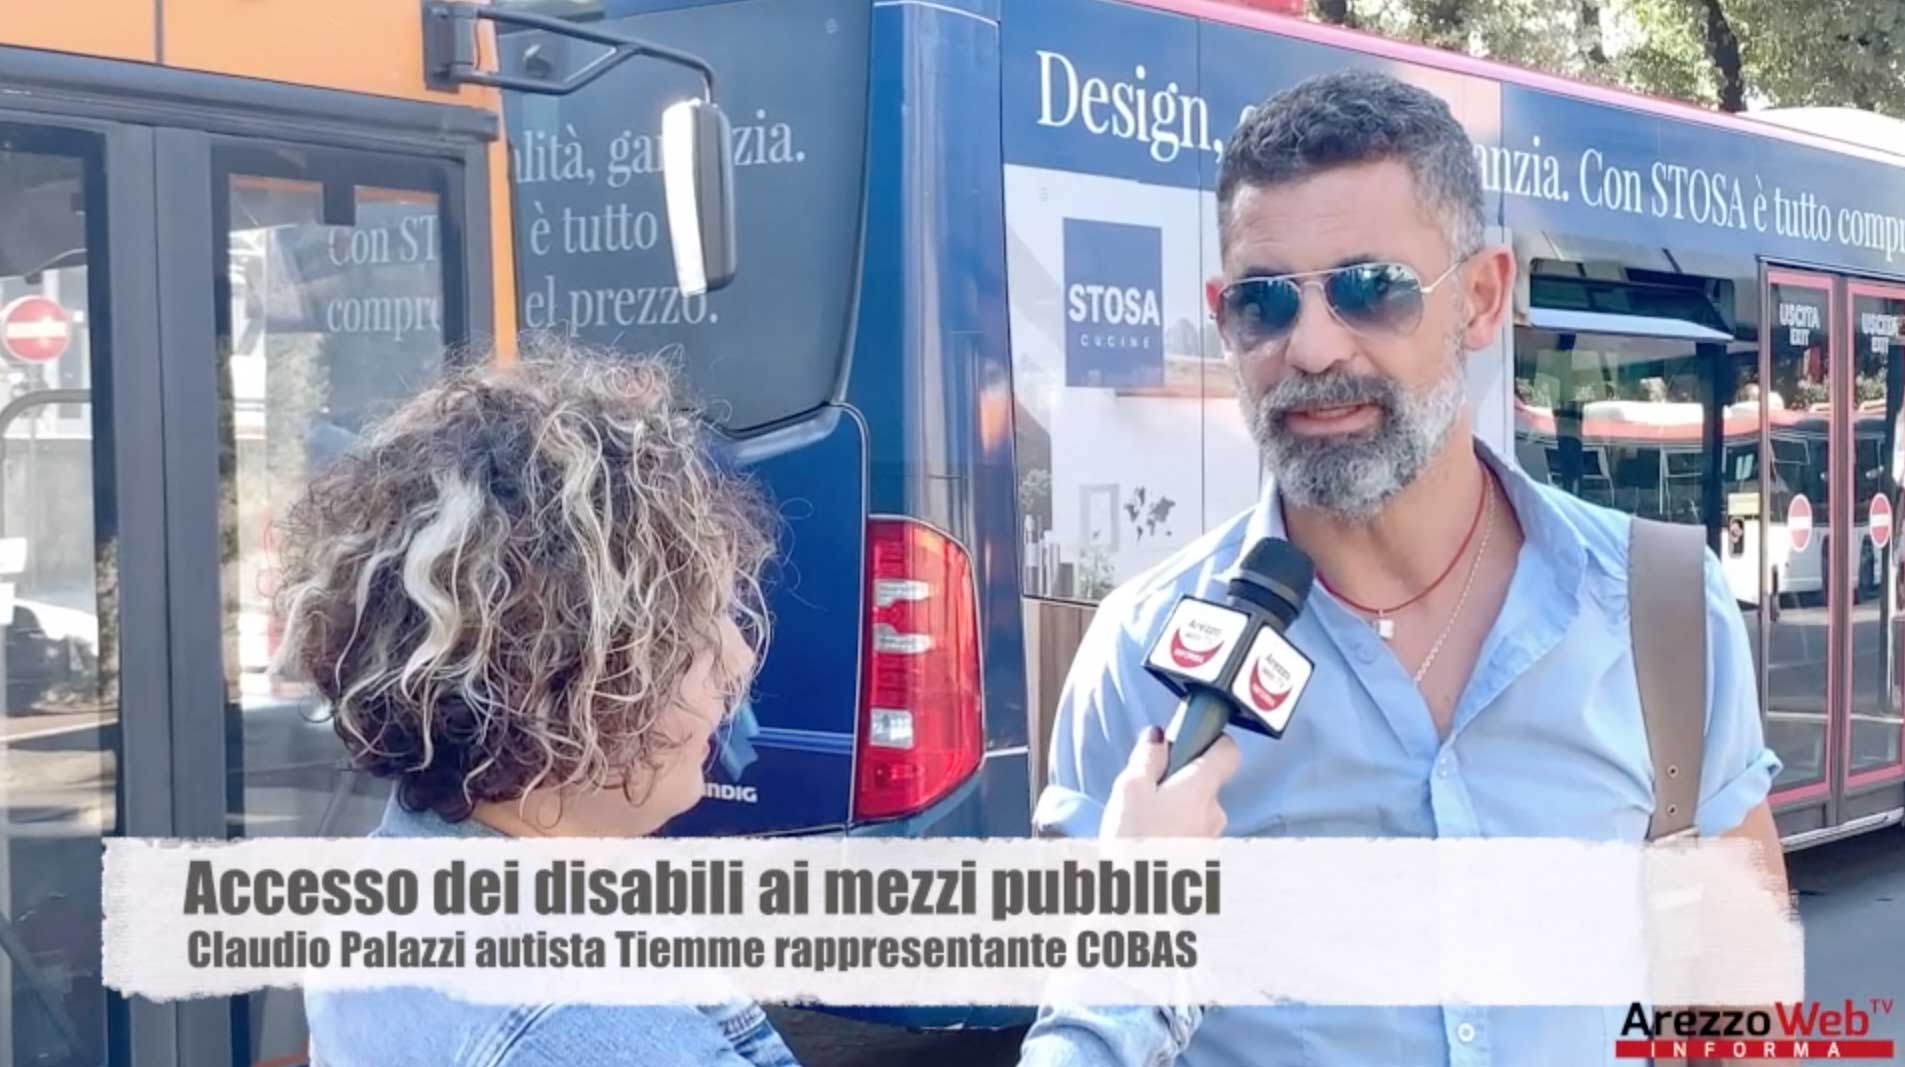 Accesso dei disabili ai mezzi pubblici ce ne parla Claudio Palazzi autista Tiemme e rappresentate Cobas